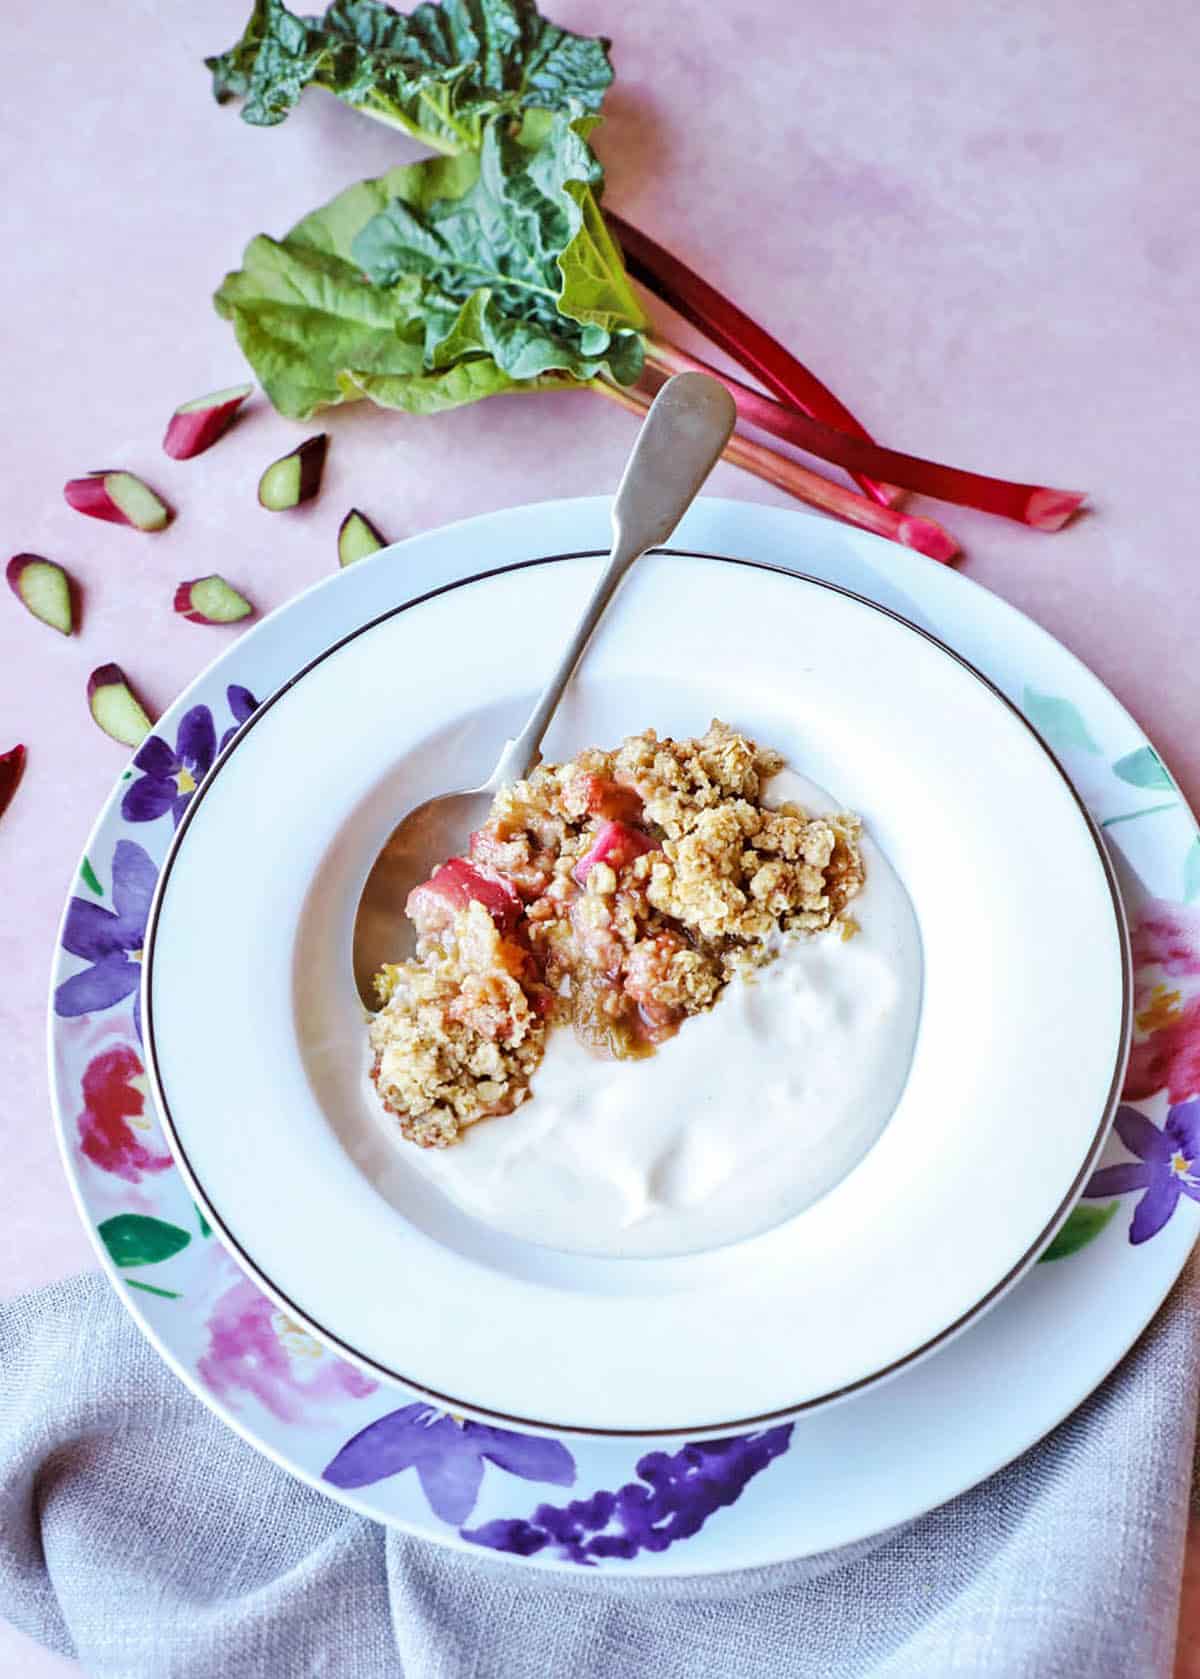 Rhubarb Crumble in bowl with custard and spoon